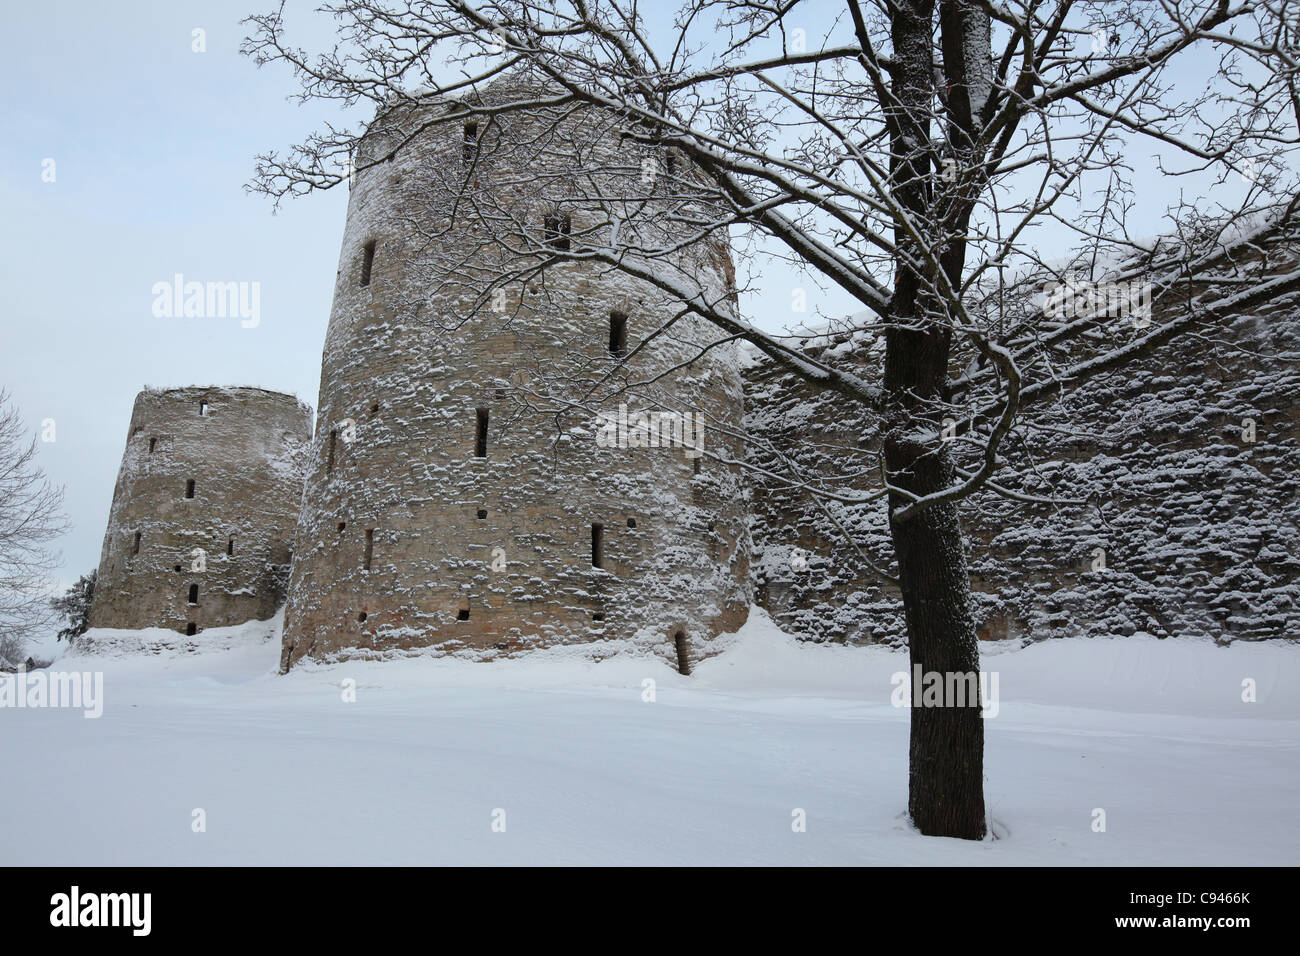 Ryabinovka Tower (R) and Vyshka Tower (L) of the Izborsk Fortress in Pskov region, Russia. Stock Photo